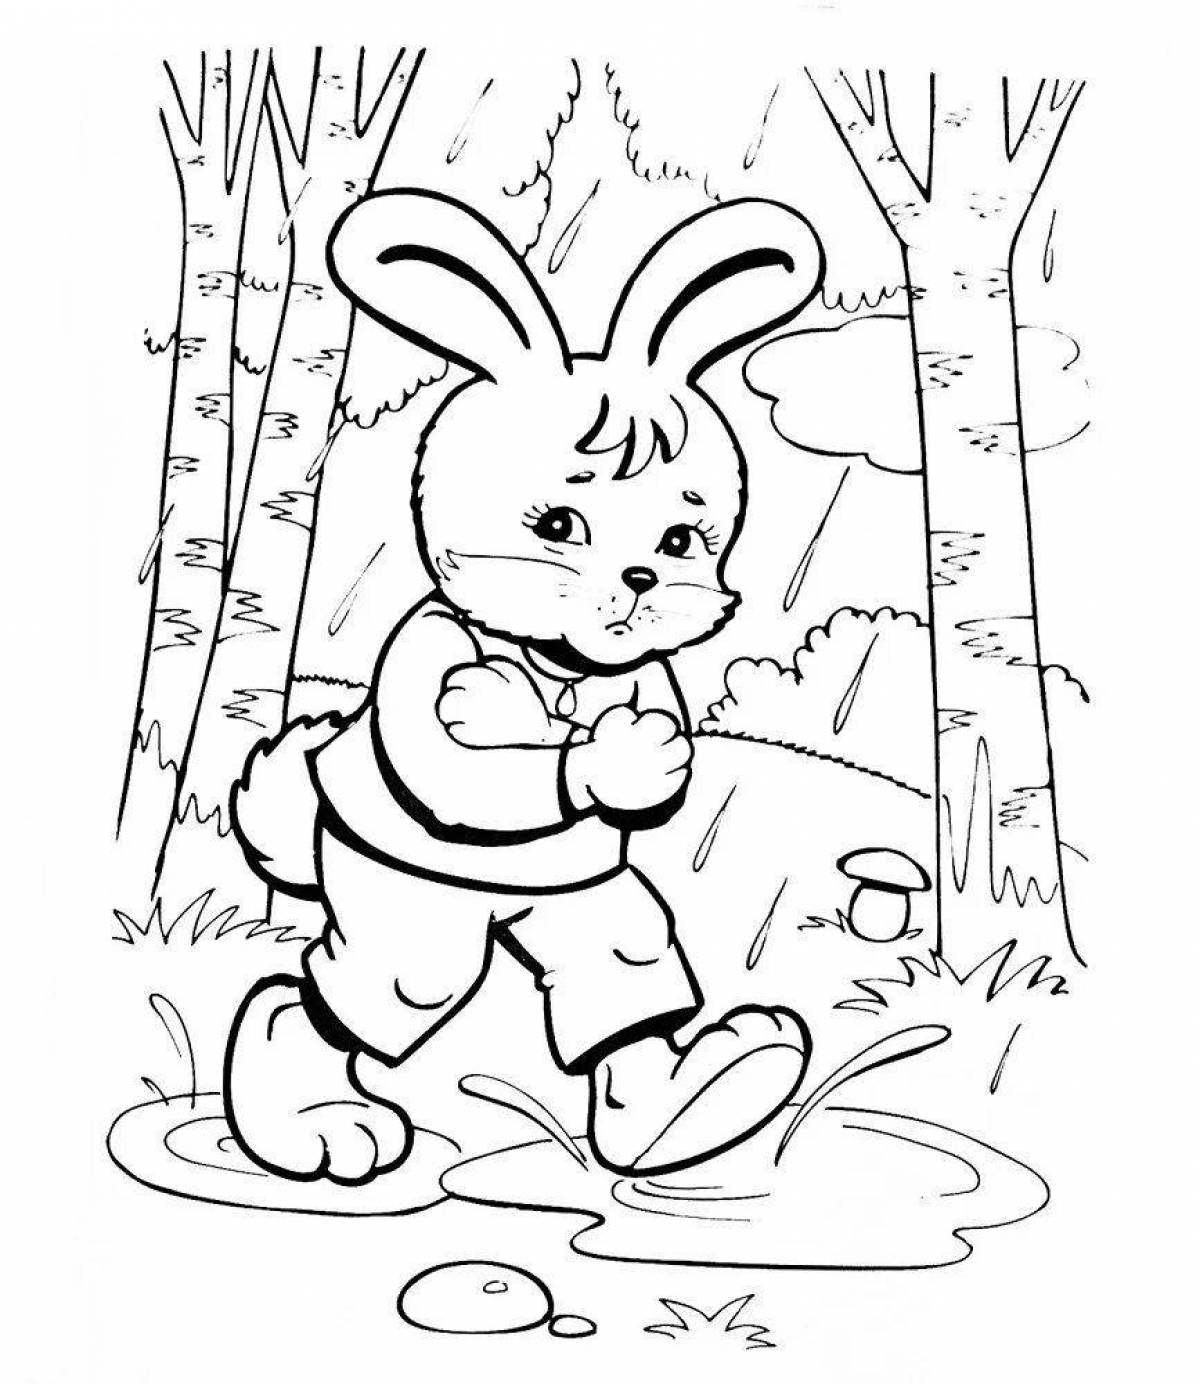 Delightful rabbit hut coloring book